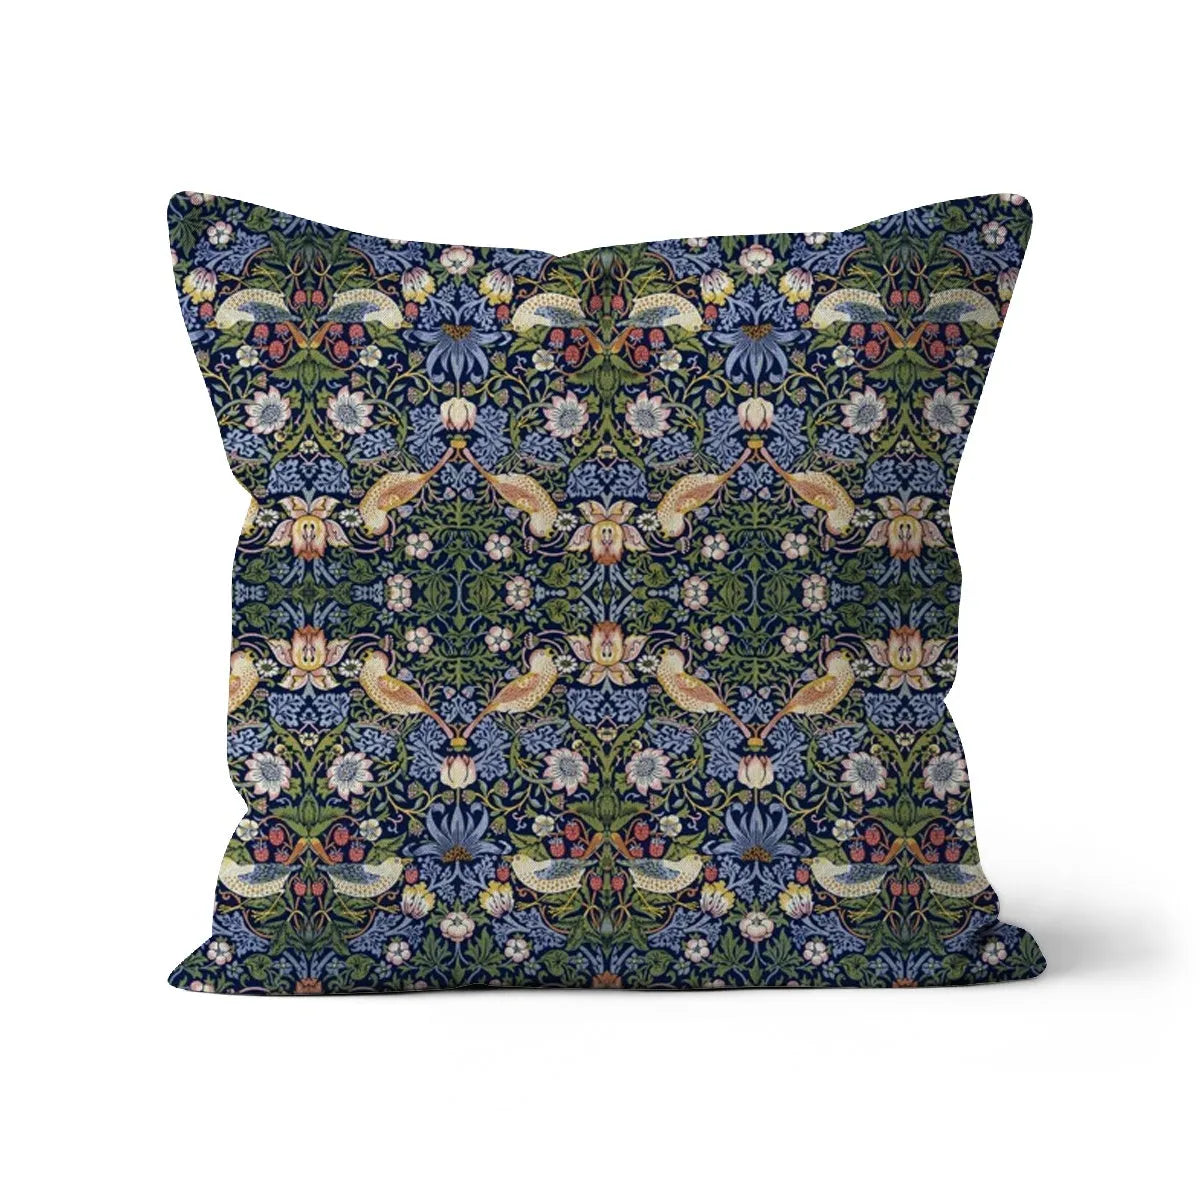 Strawberry Thief - William Morris Cushion - Decorative Throw Pillow - Canvas /